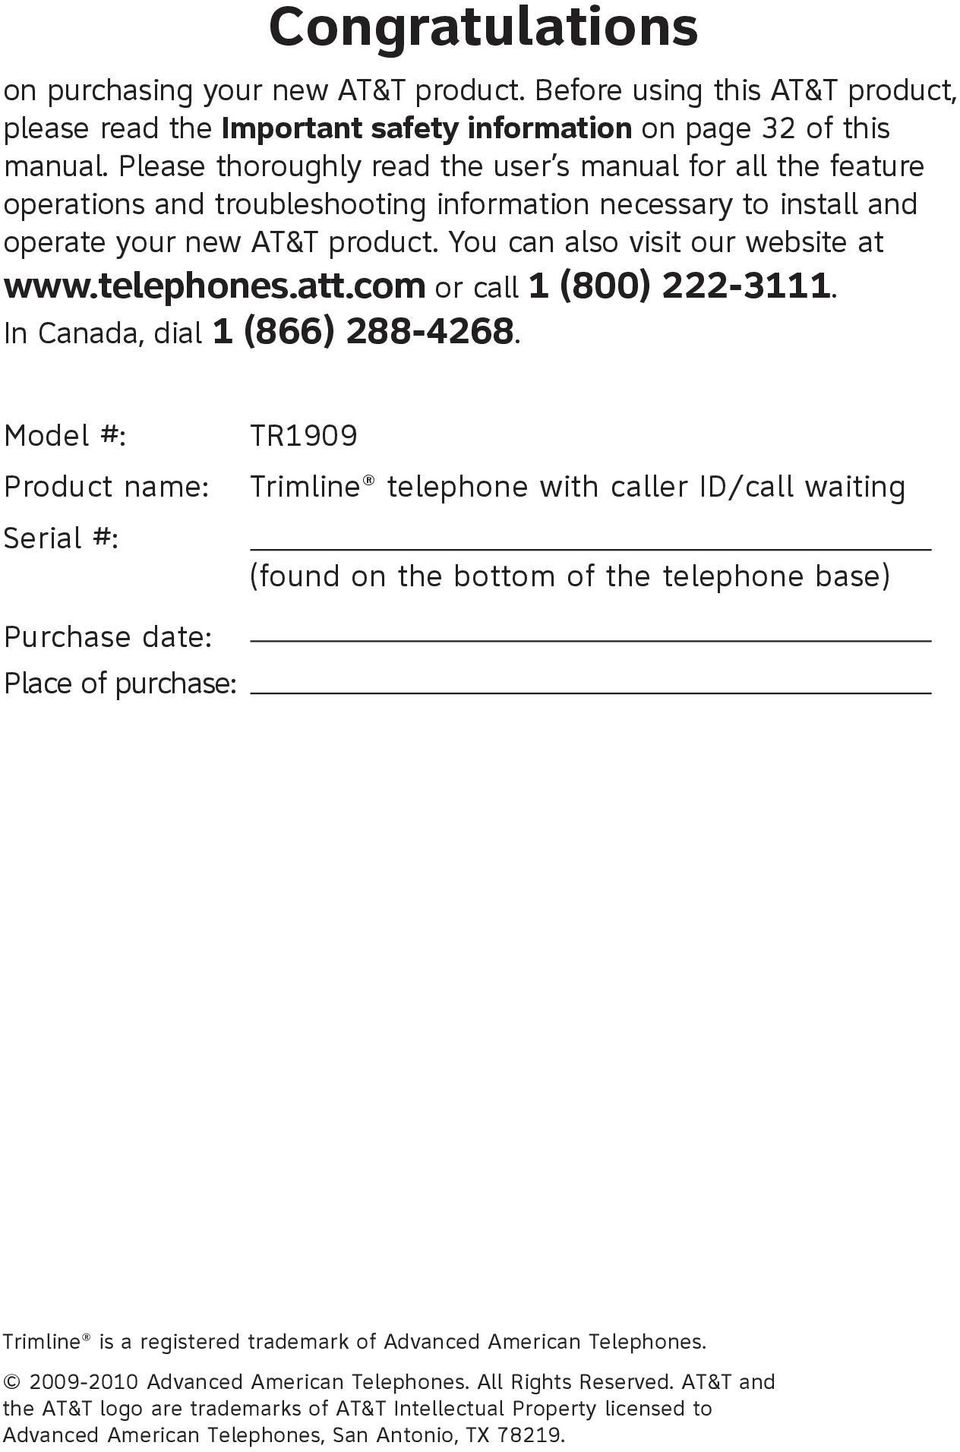 telephones.att.com or call 1 (800) 222-3111. In Canada, dial 1 (866) 288-4268.